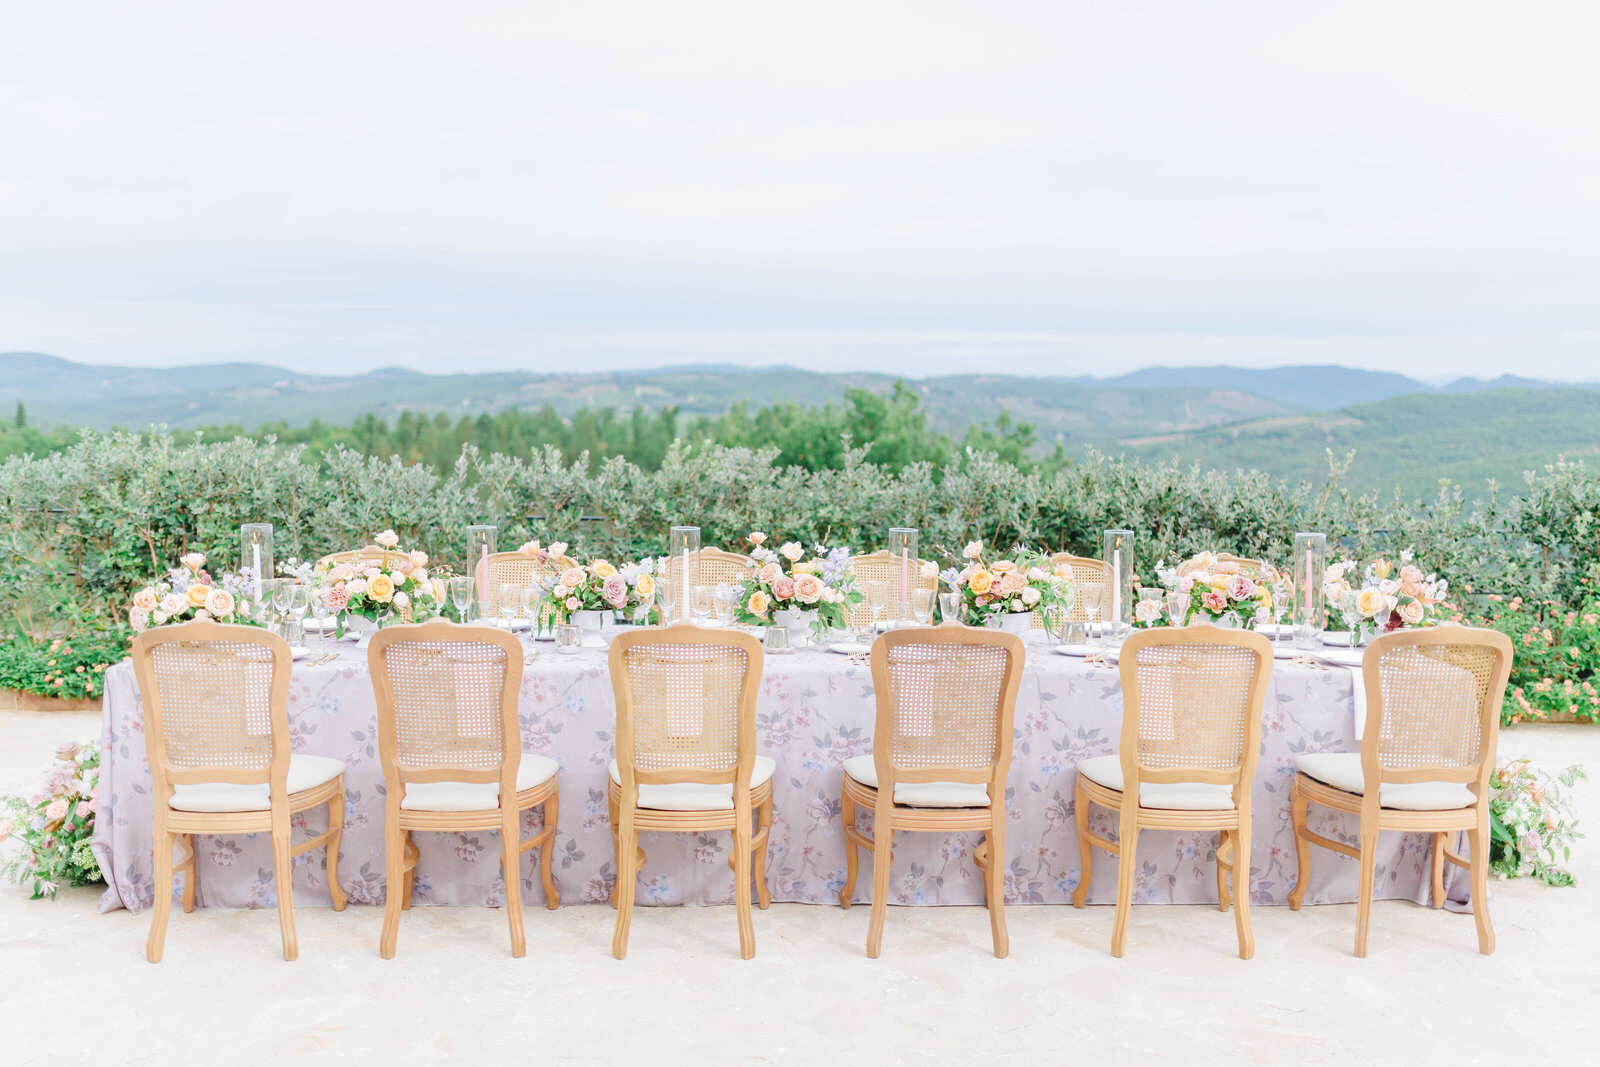 MorganeBallPhotography-Wedding-Tuscany-TheClubHouse-LovelyInstants-02-WelcomeDinner-details-lq-46-